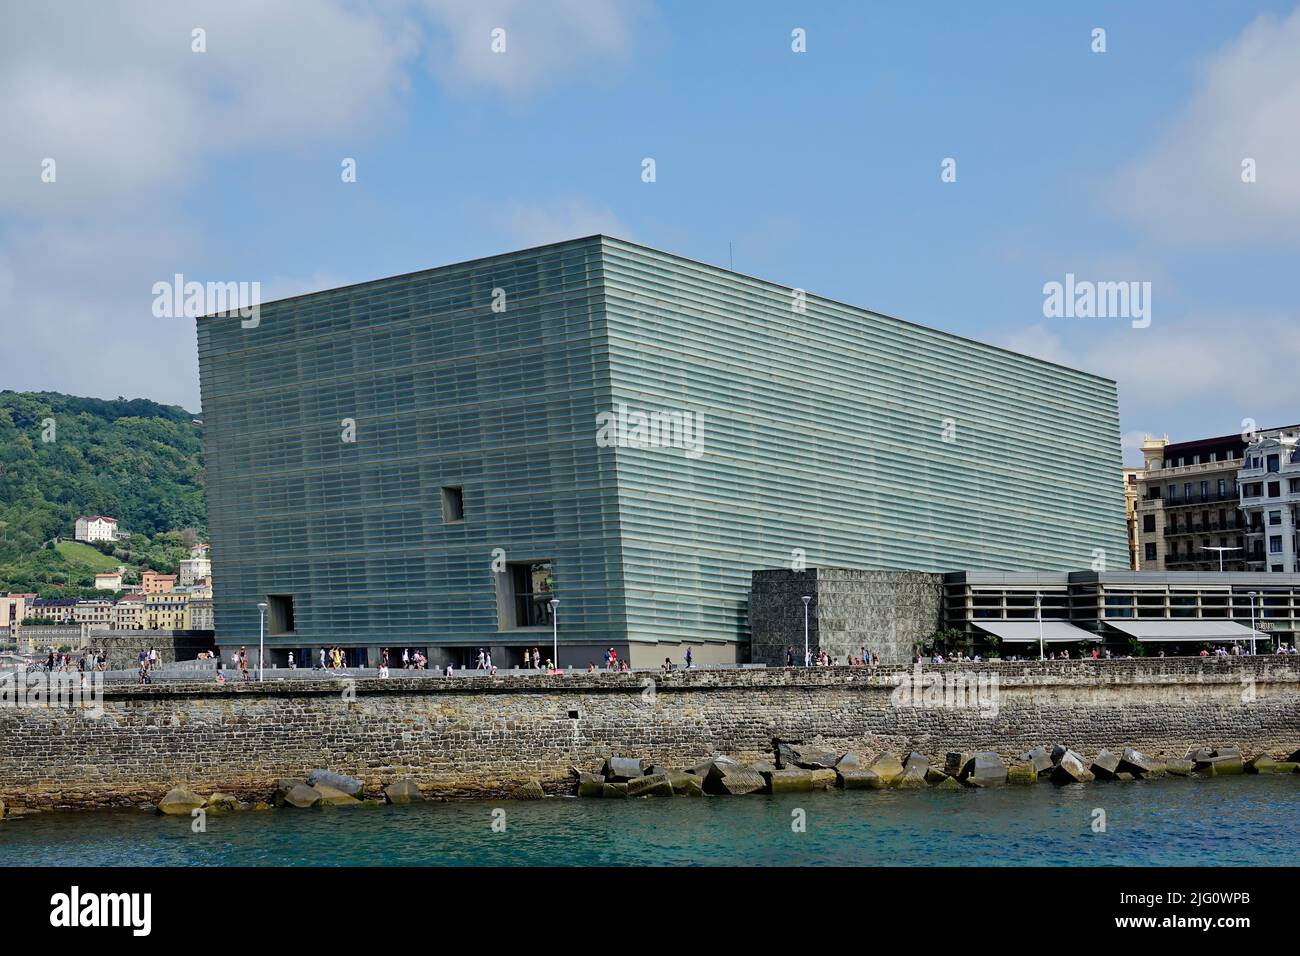 Der Kursaal in San Sebastian, Kultur- und Kongresszentrum. San Sebastian, Spanien - August 2020 Stockfoto